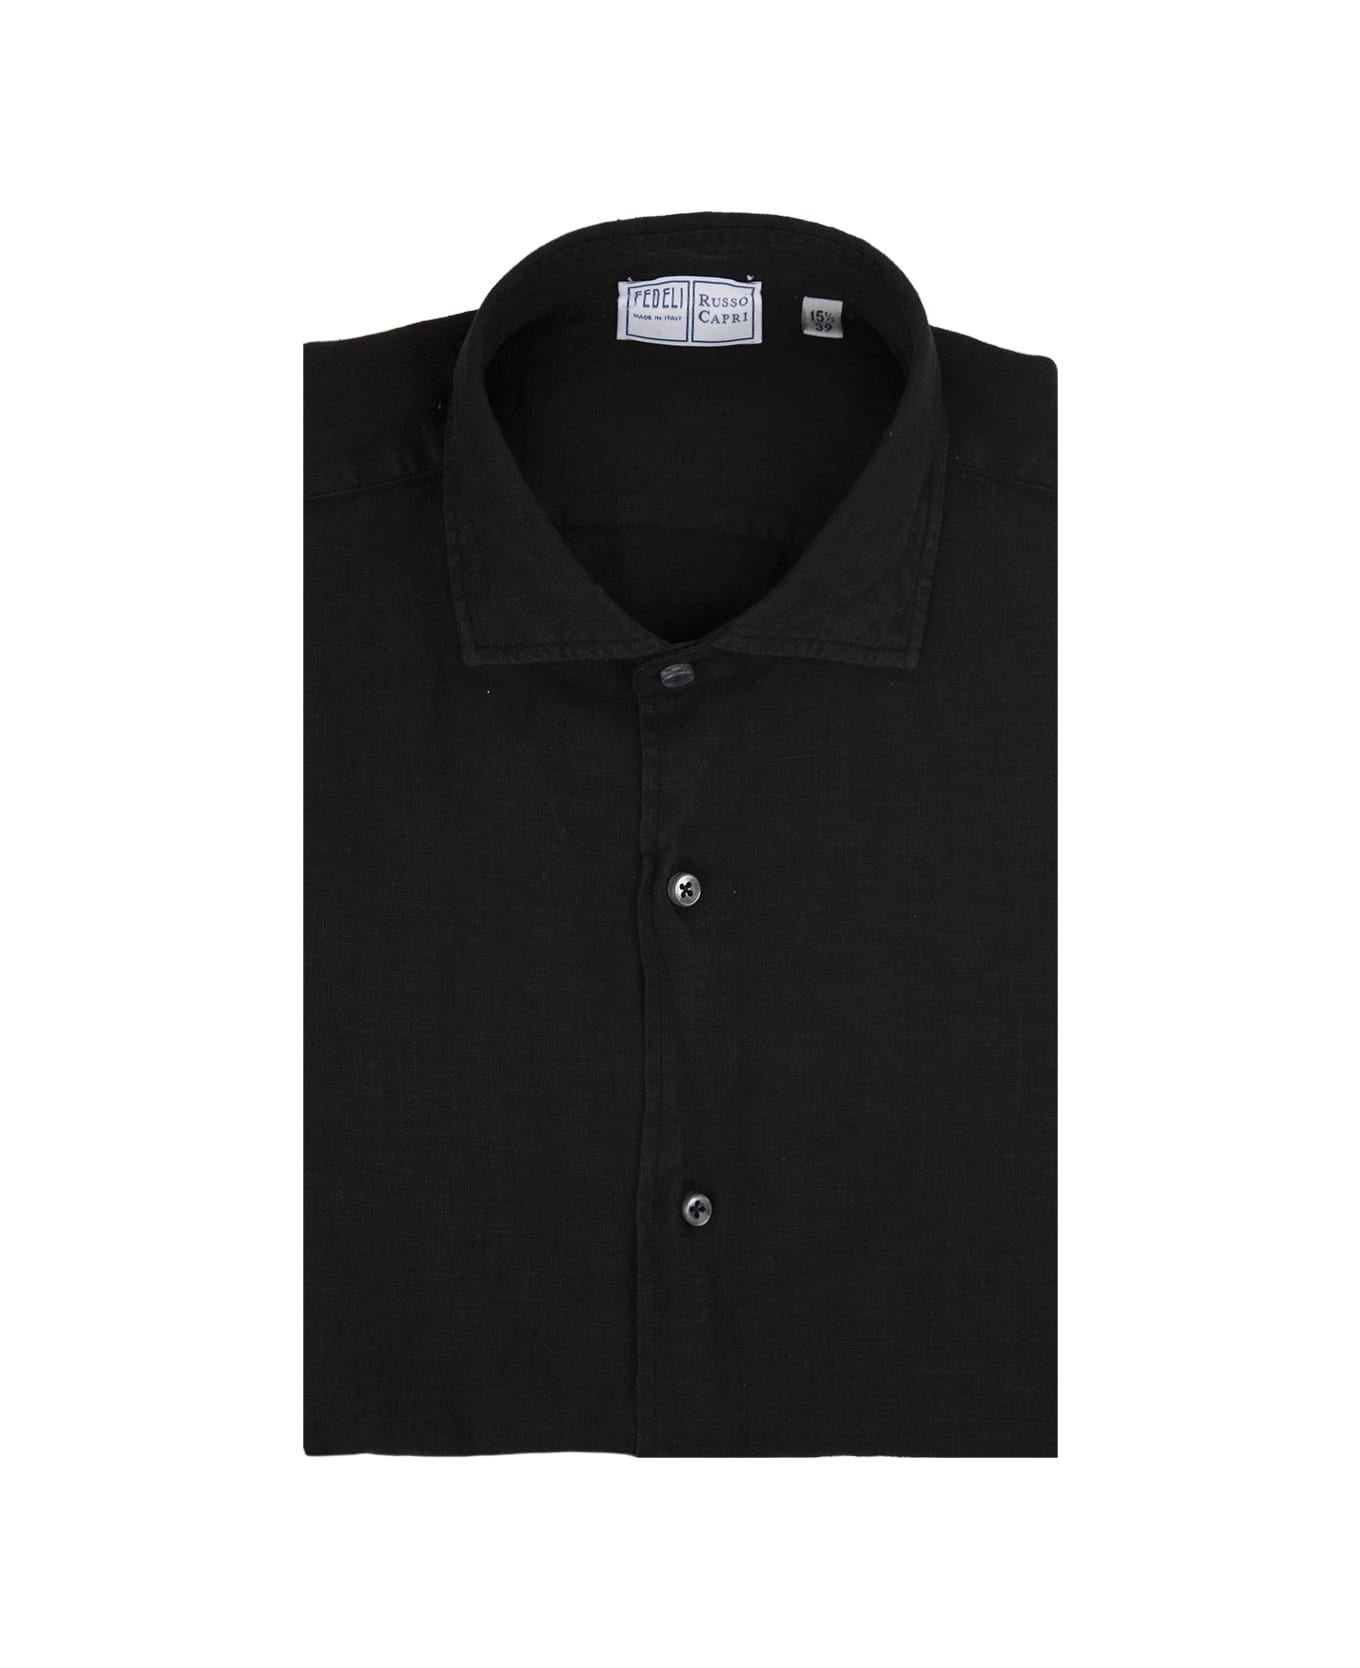 Fedeli Nick Shirt In Black Linen - Black